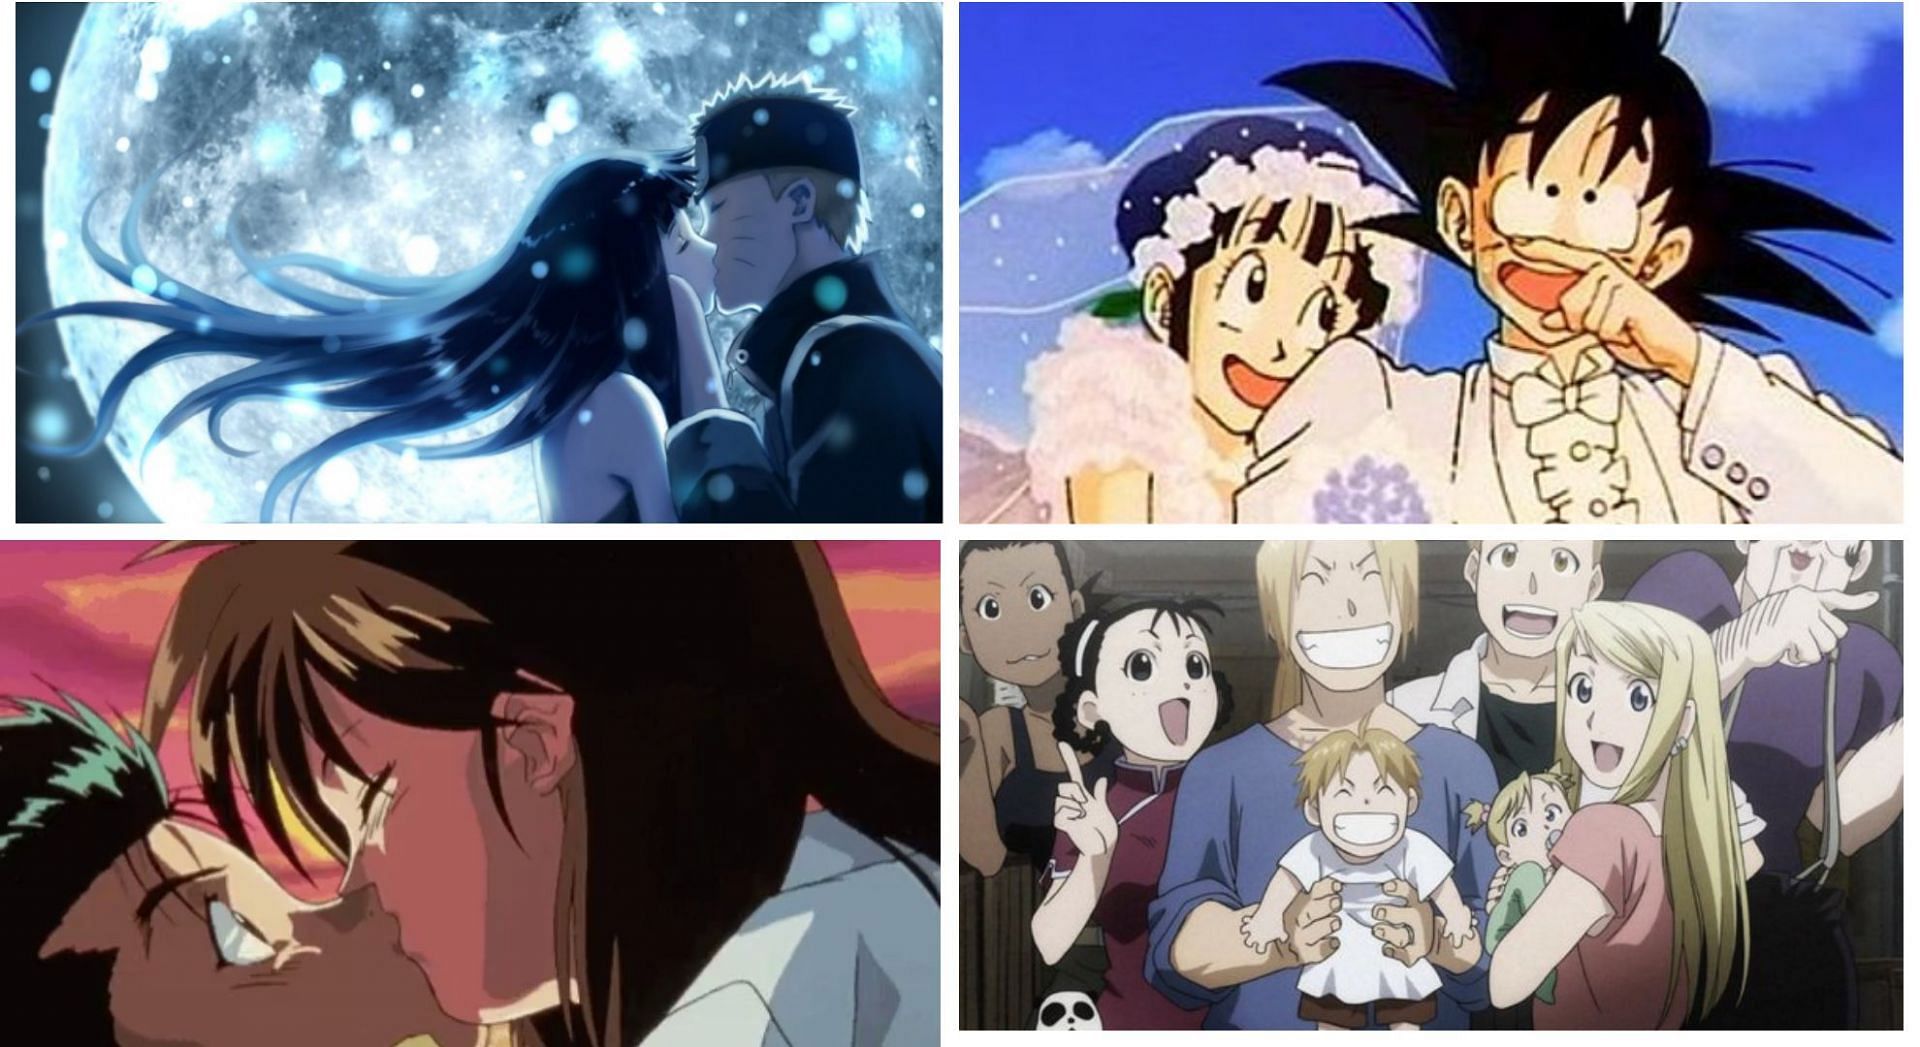 Romance anime between childhood friends  Forums  MyAnimeListnet